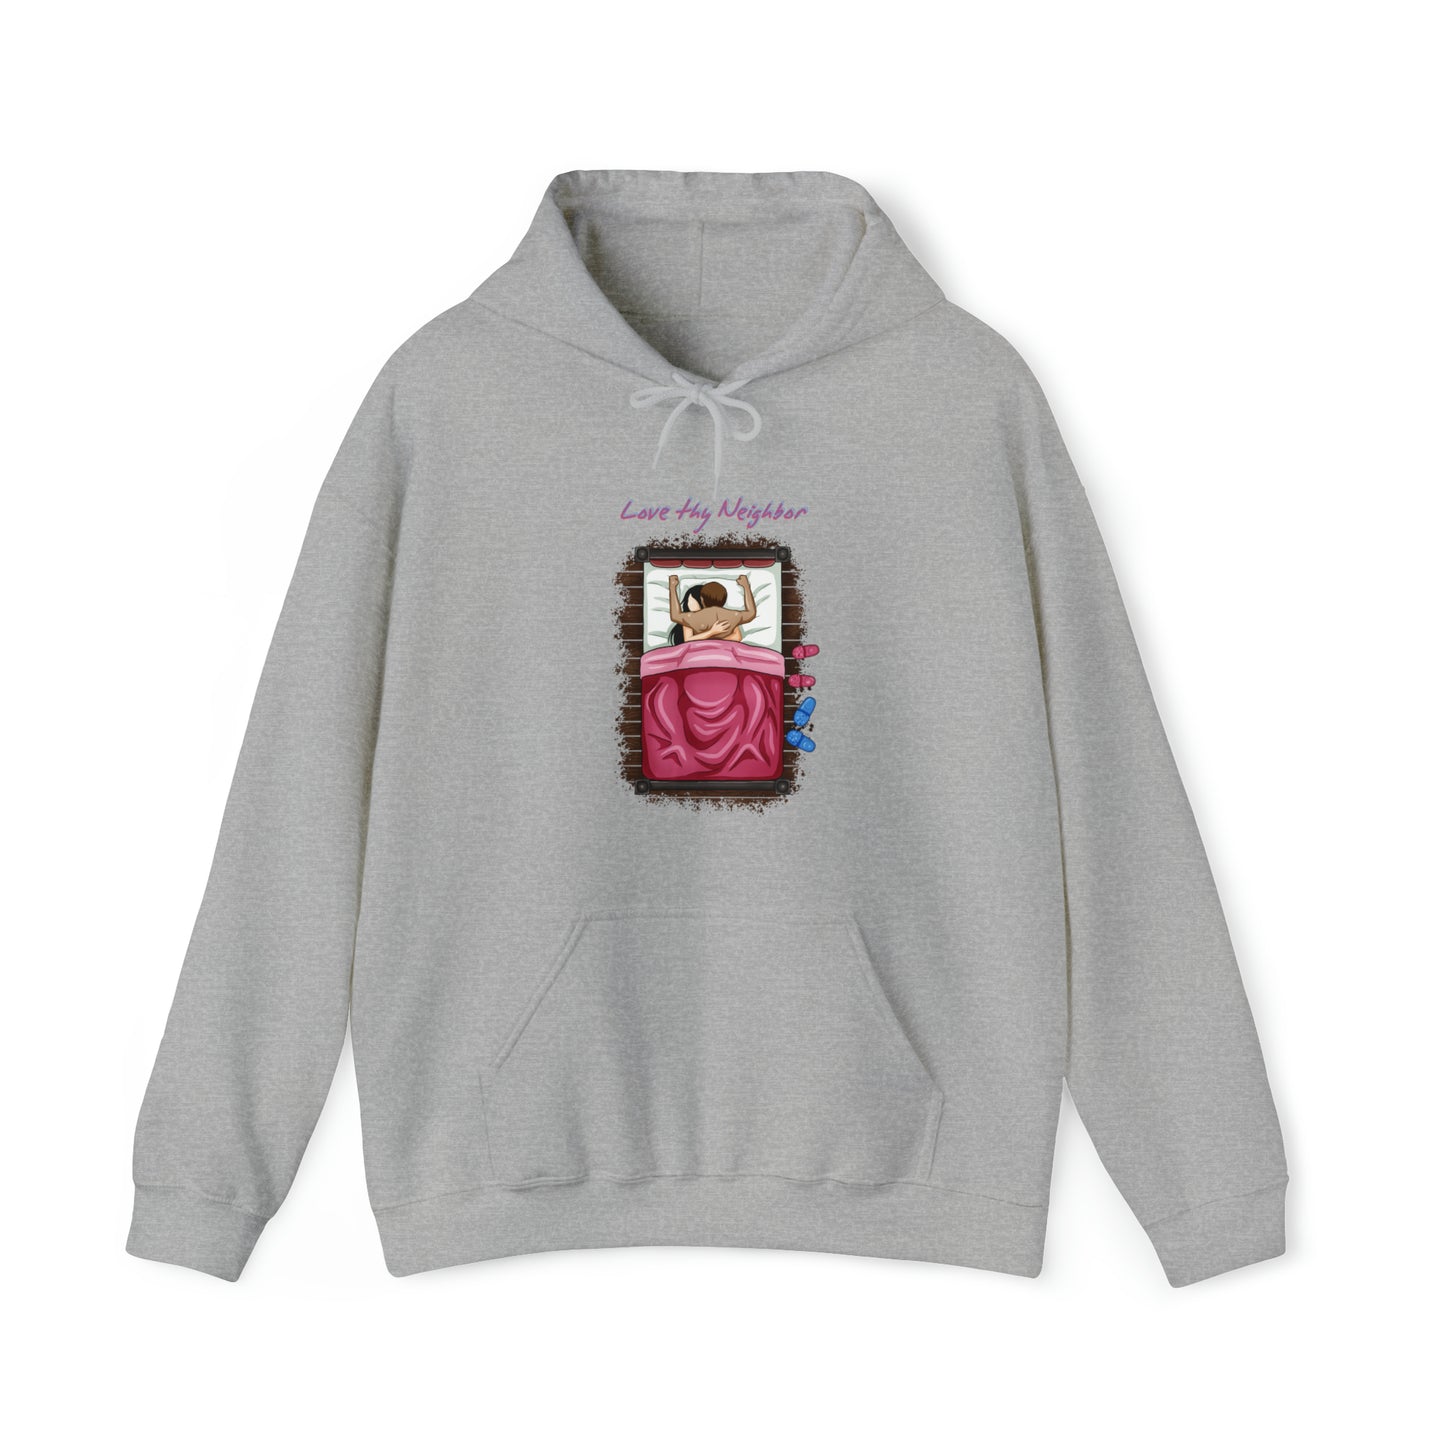 Custom Parody Hooded Sweatshirt, Love Thy Neighbor design